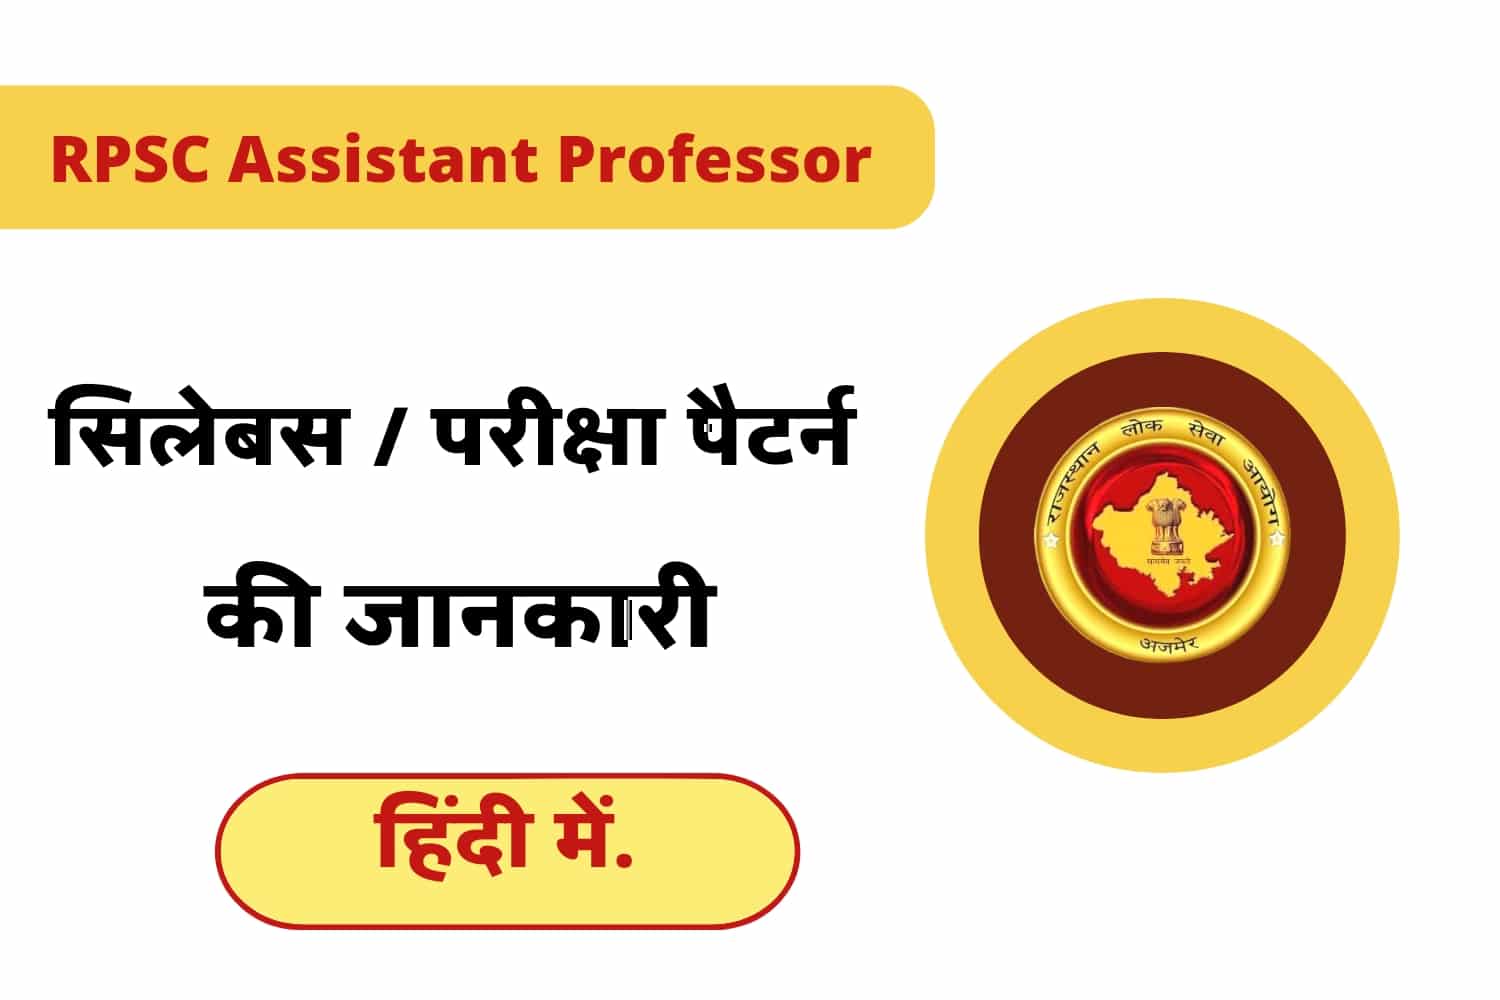 RPSC Assistant Professor Syllabus In Hindi | राजस्थान सहायक प्रोफेसर सिलेबस इन हिंदी